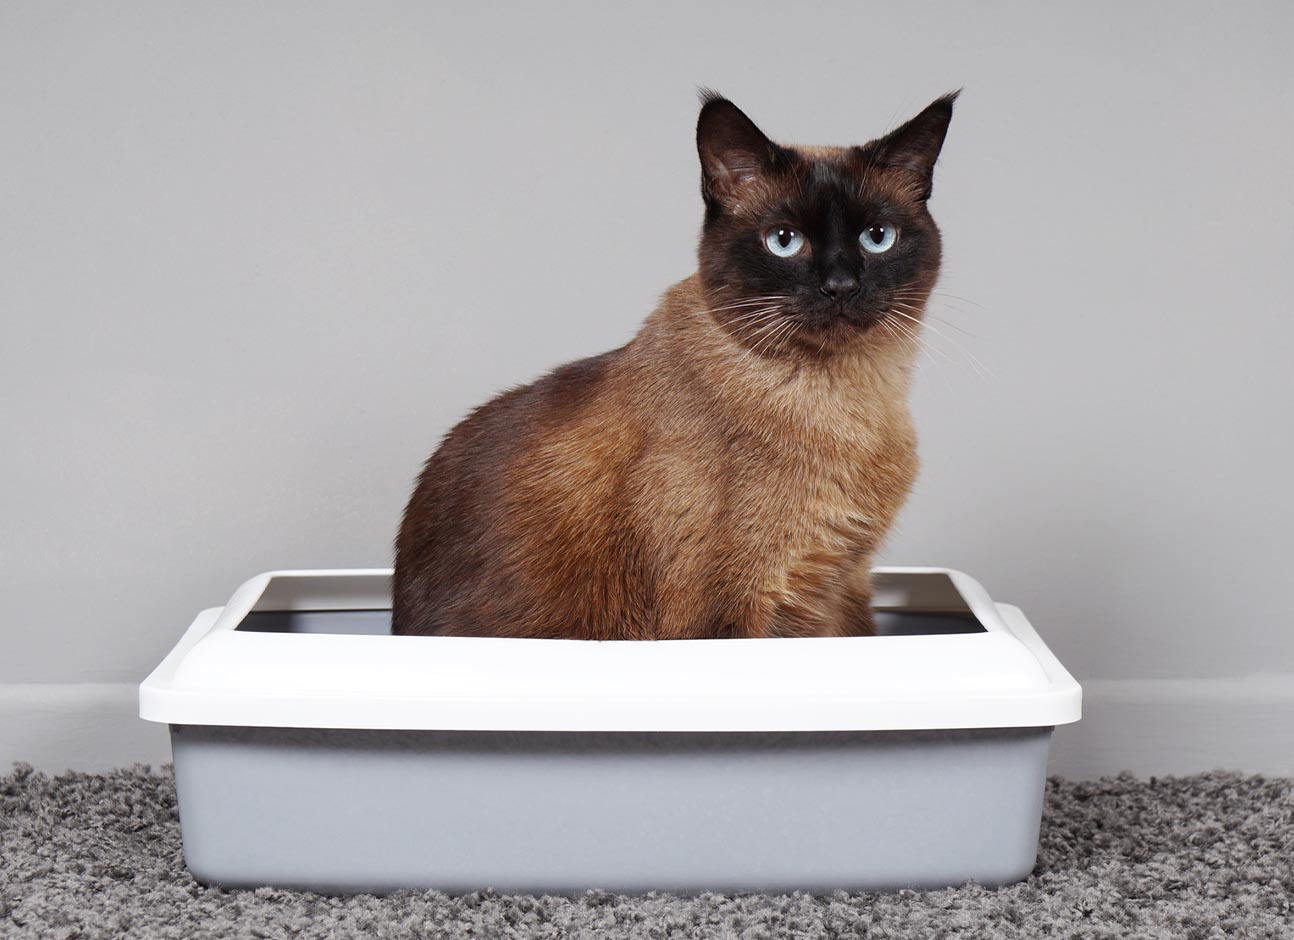 Cat in tray